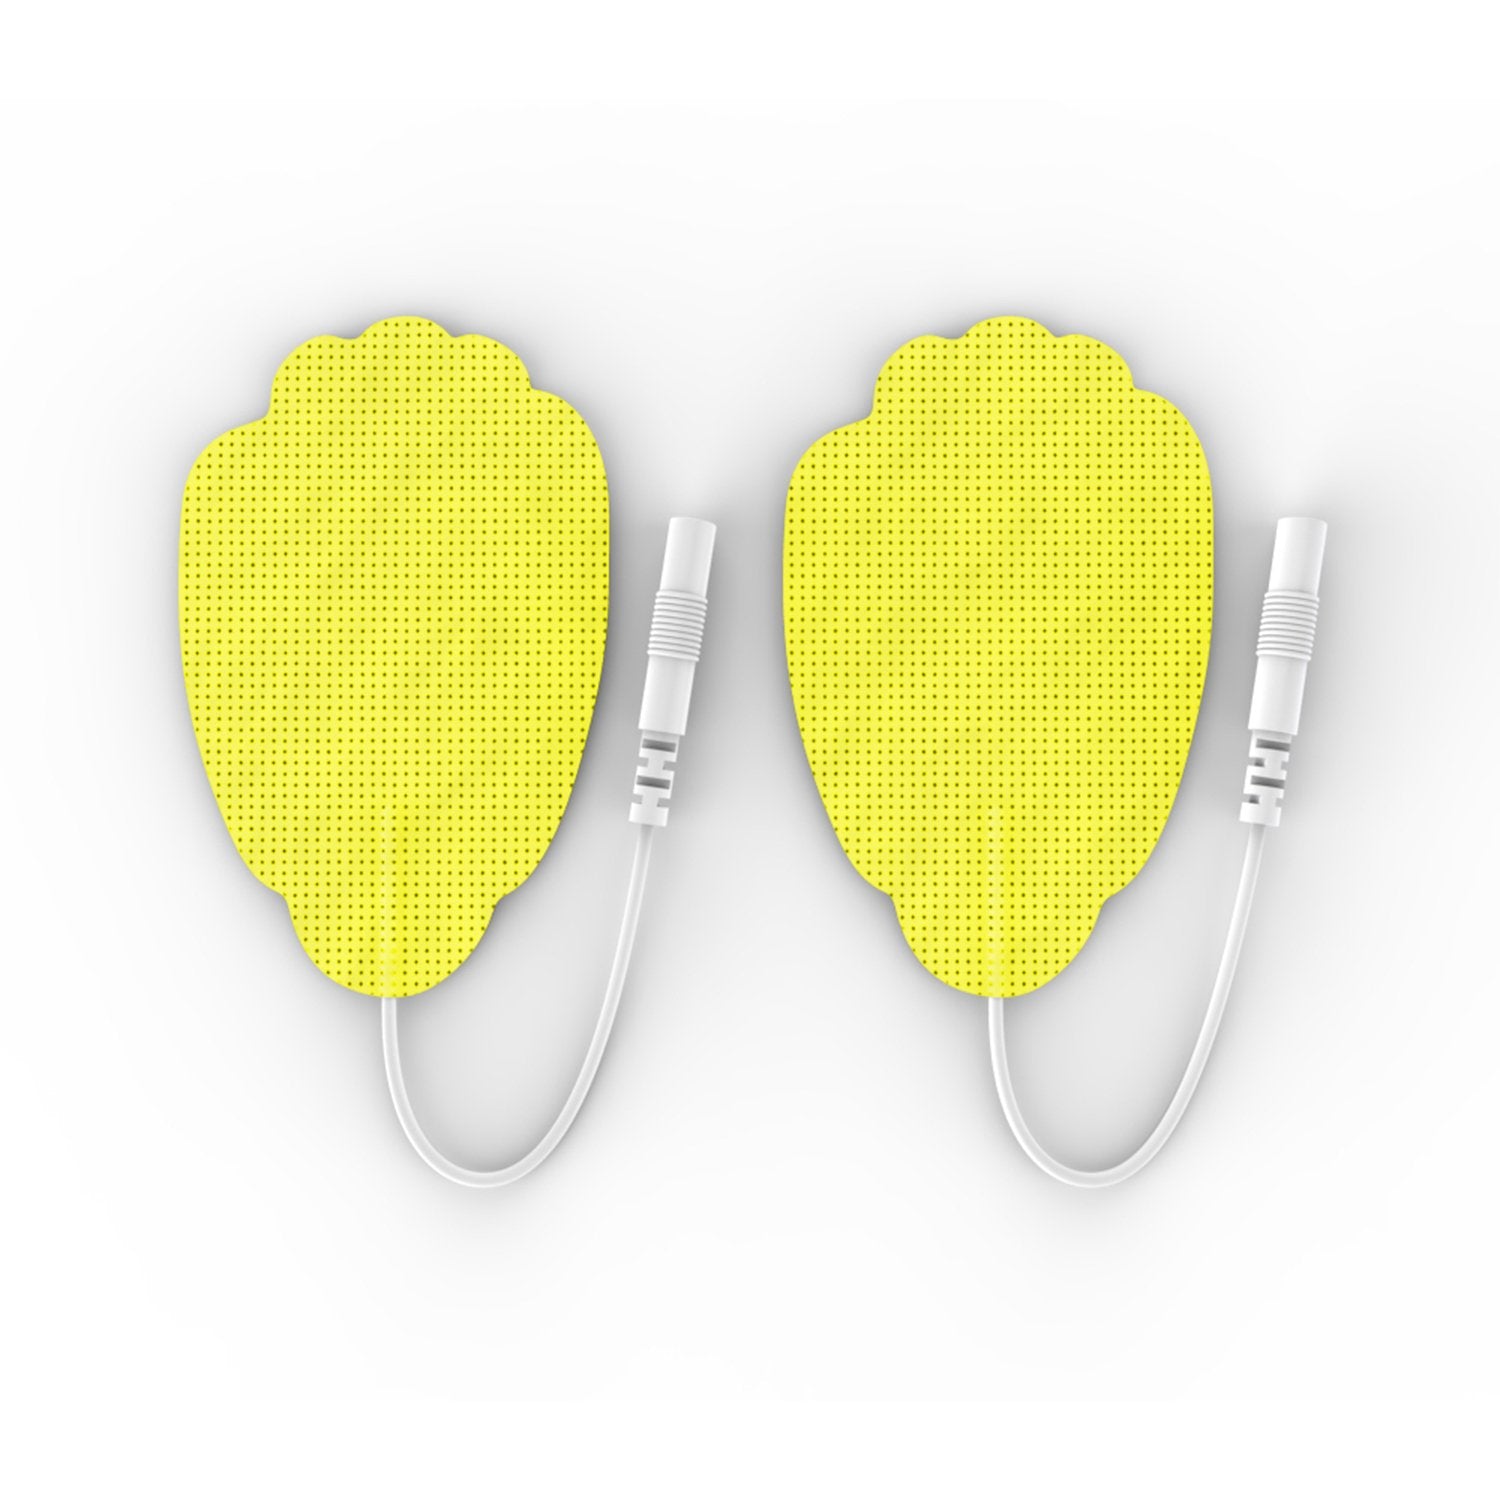 5 Pairs (10 Pcs) Yellow Pin-Insert Large Hand-Shaped Pads - HealthmateForever.com